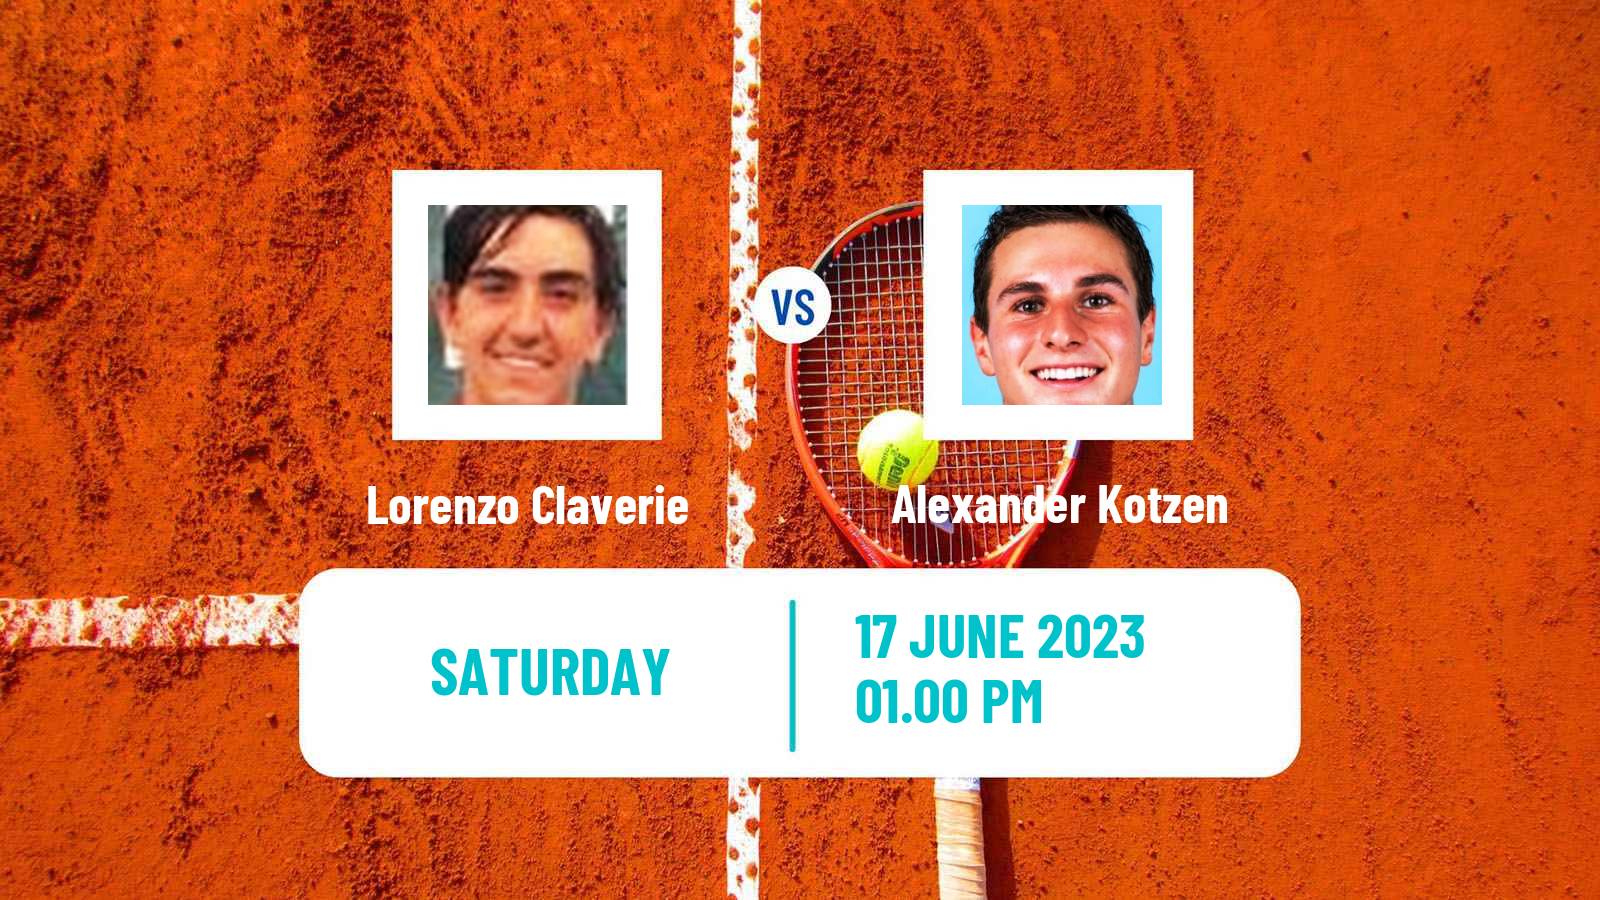 Tennis ITF M15 San Diego Ca 2 Men Lorenzo Claverie - Alexander Kotzen